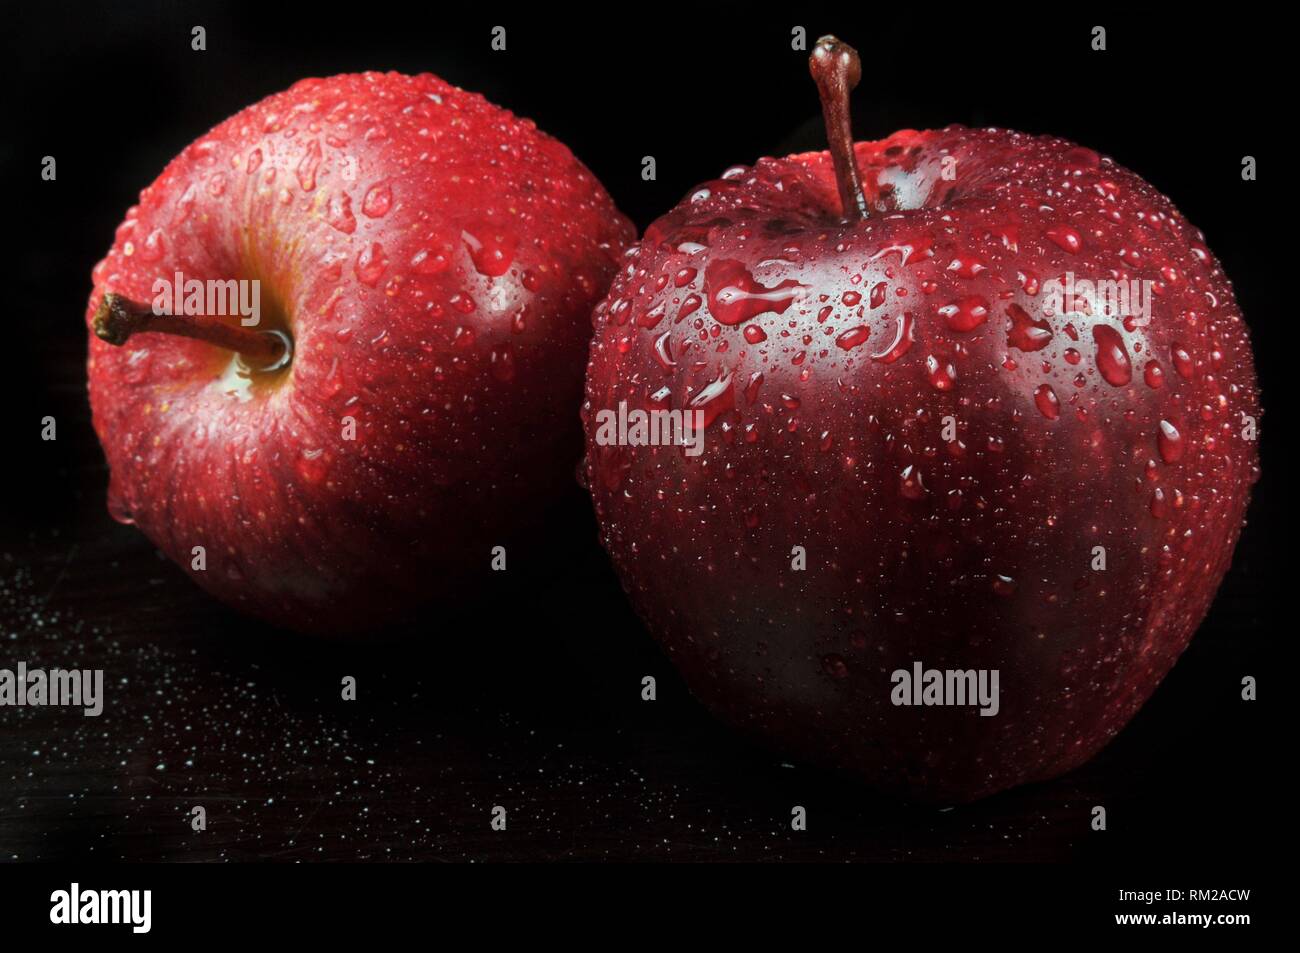 Still life studio image of Asian Red Apple Stock Photo